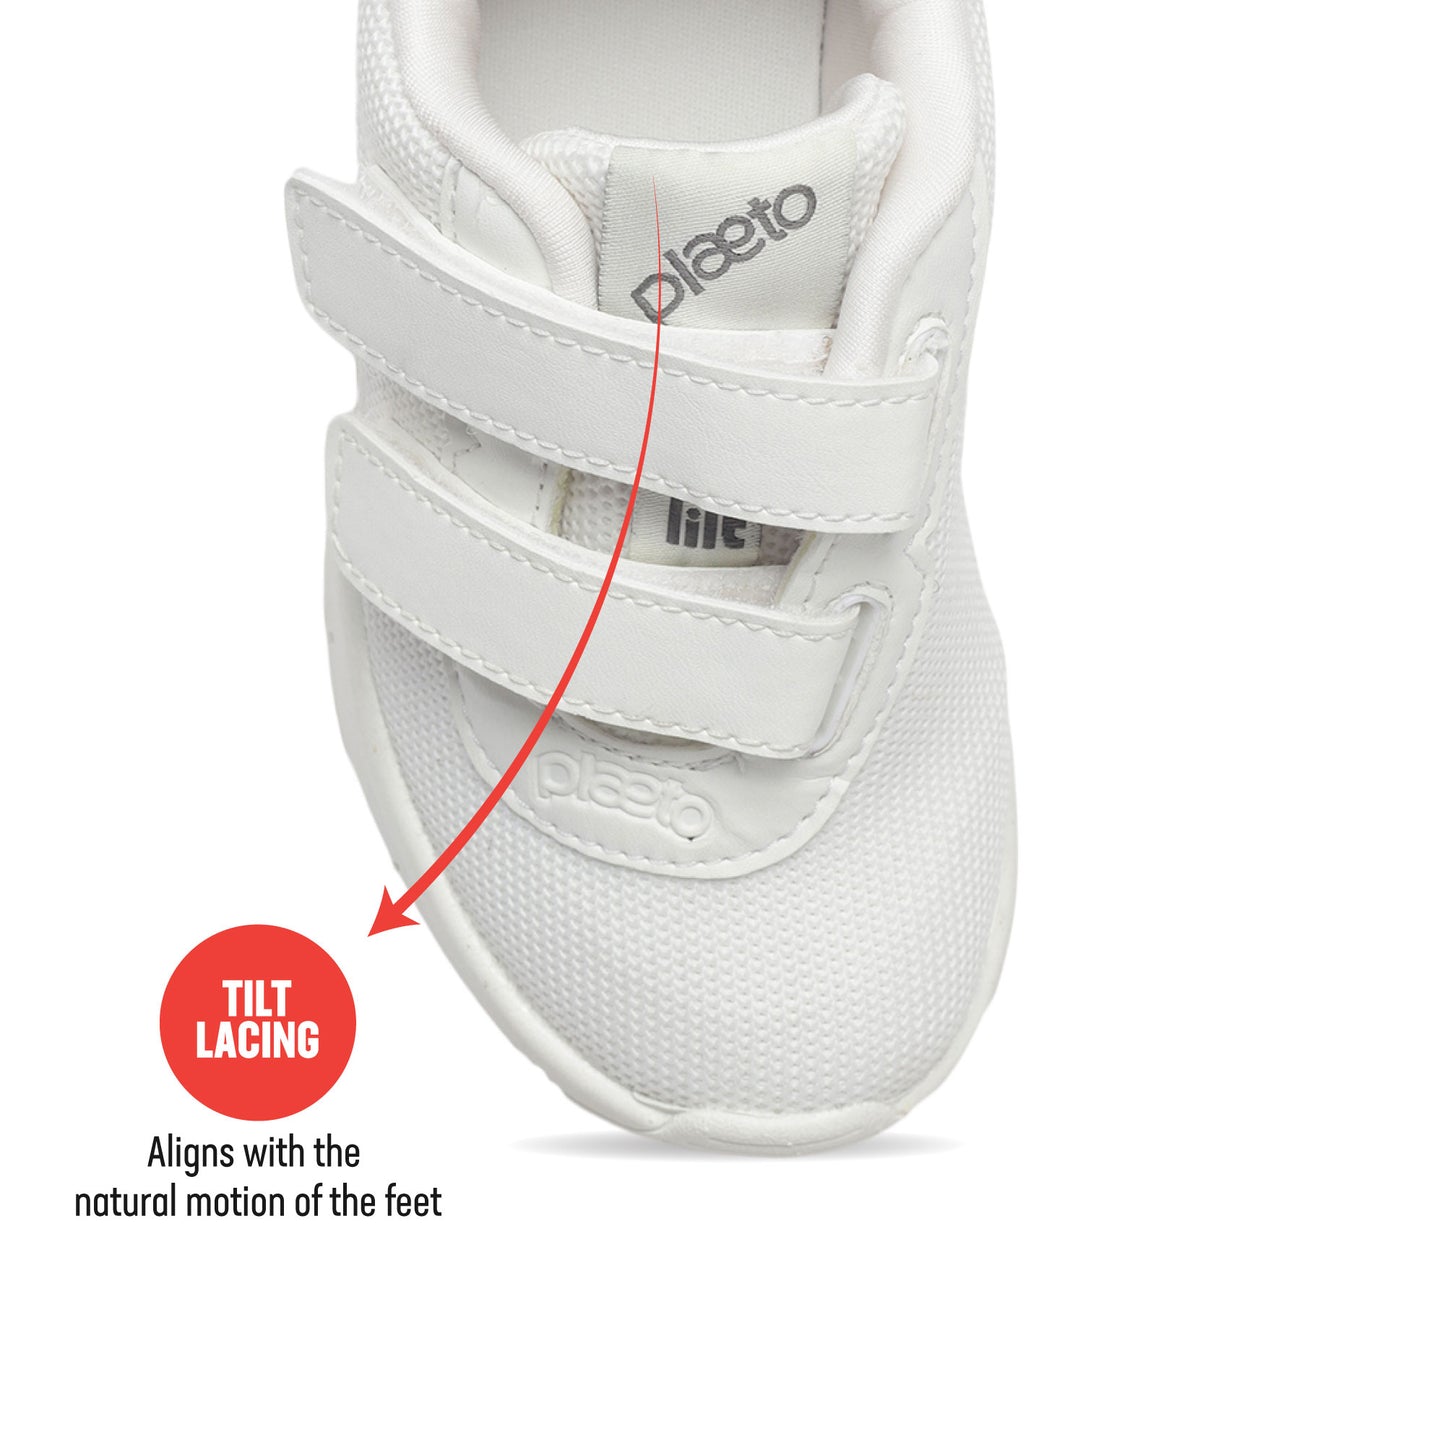 Aspire Multiplay School Shoes (7C - 13C UK) - White